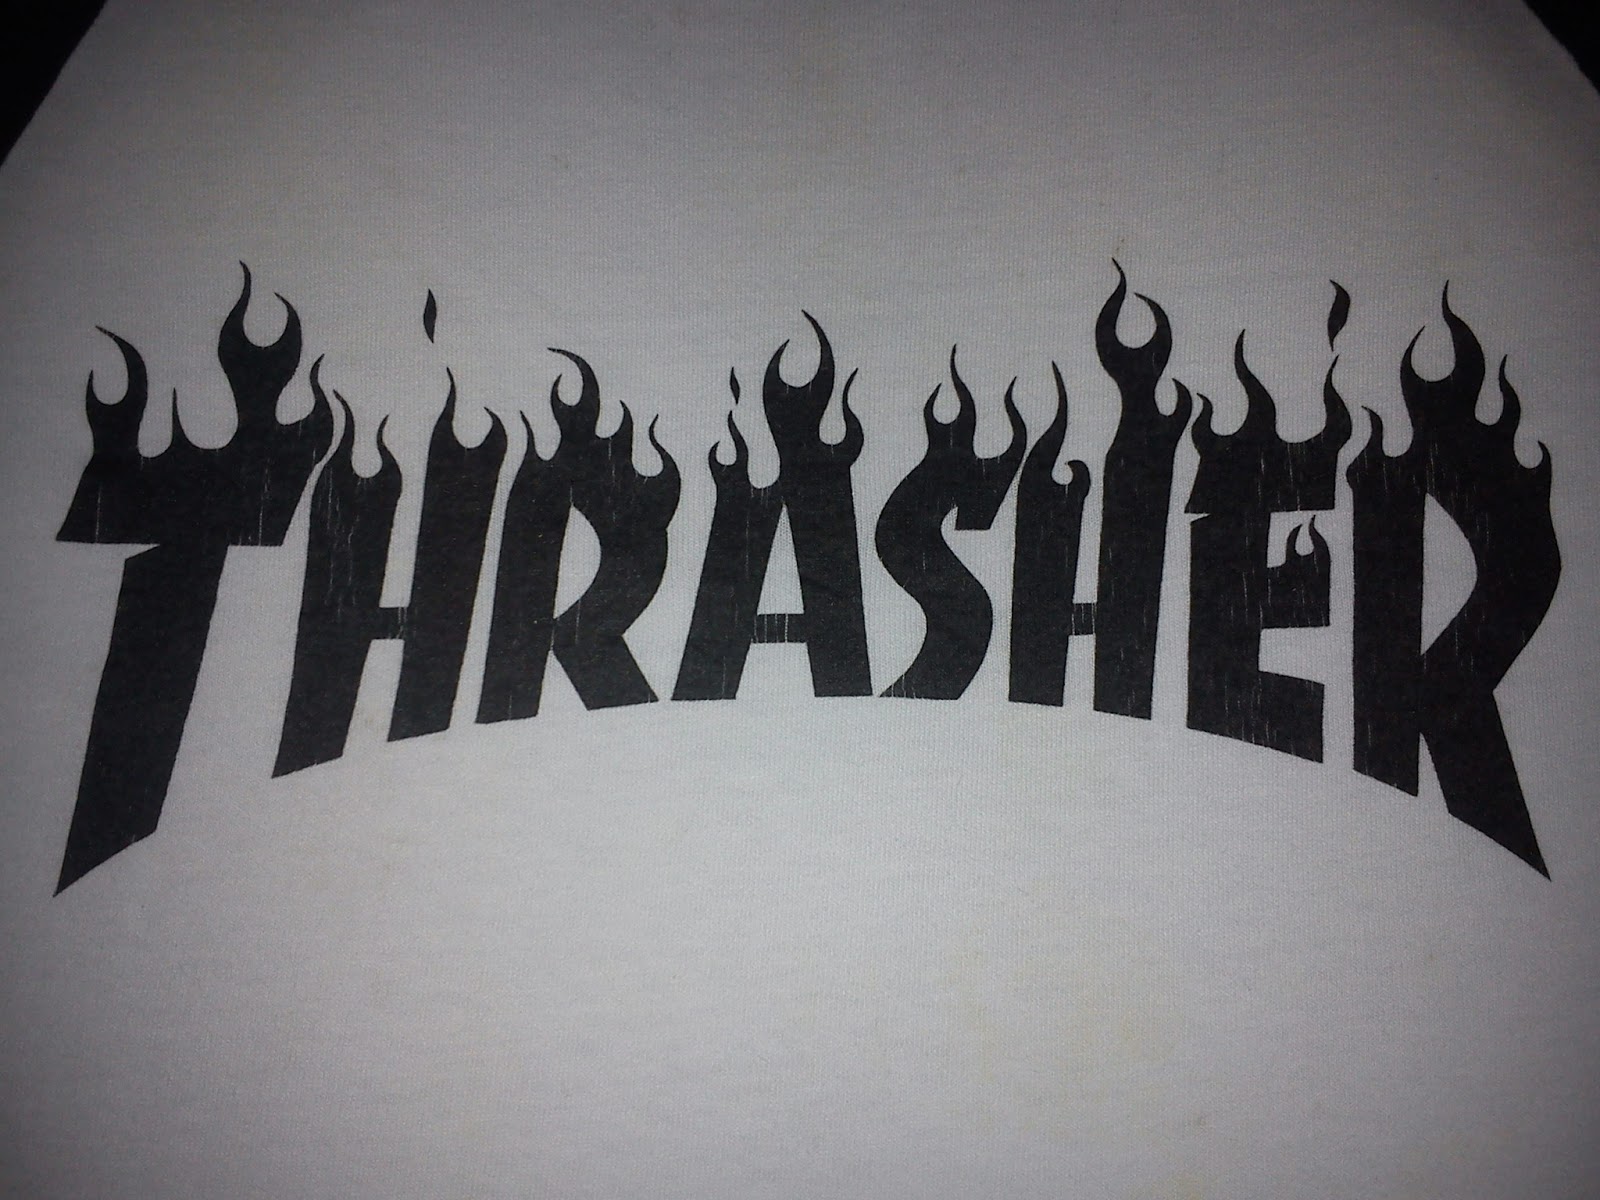 Thrasher Magazine Logo Color adio and job about logos